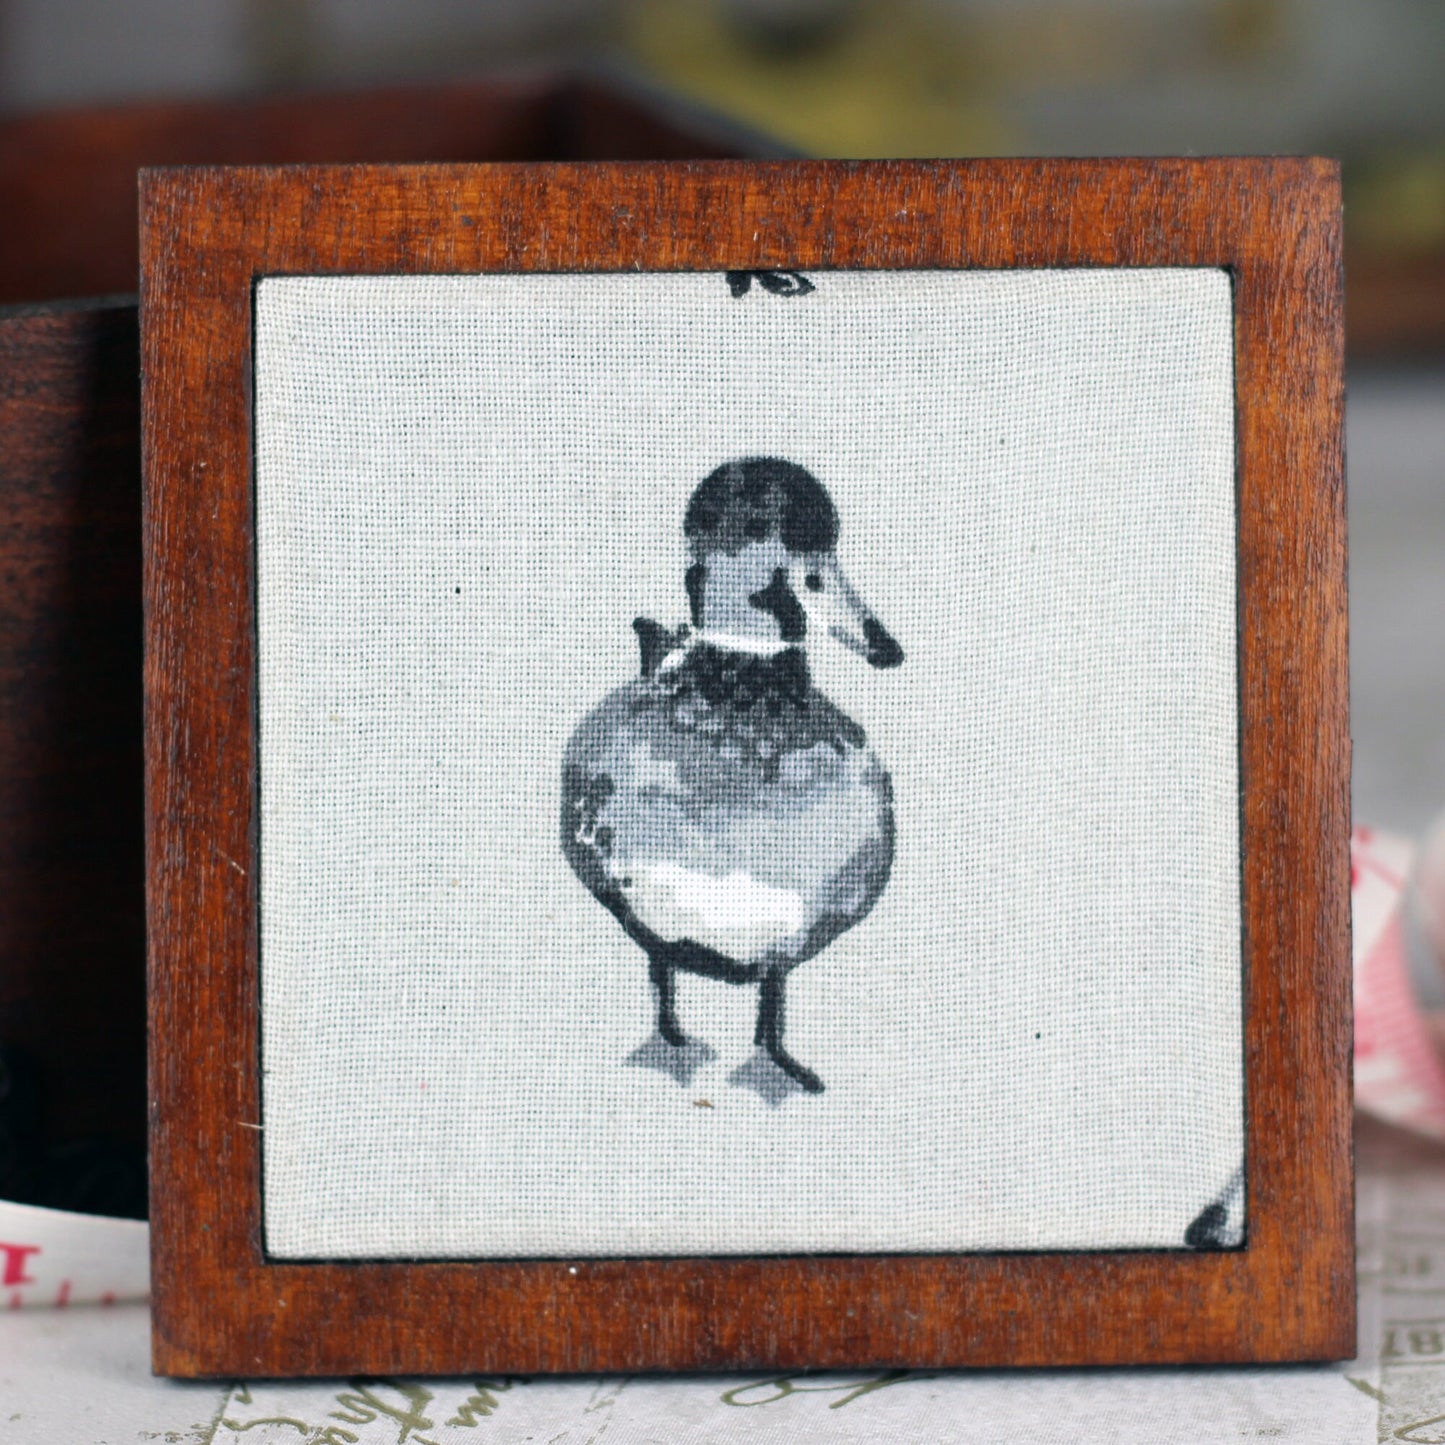 Duck Design Wooden Pin Cushion Sewing Box